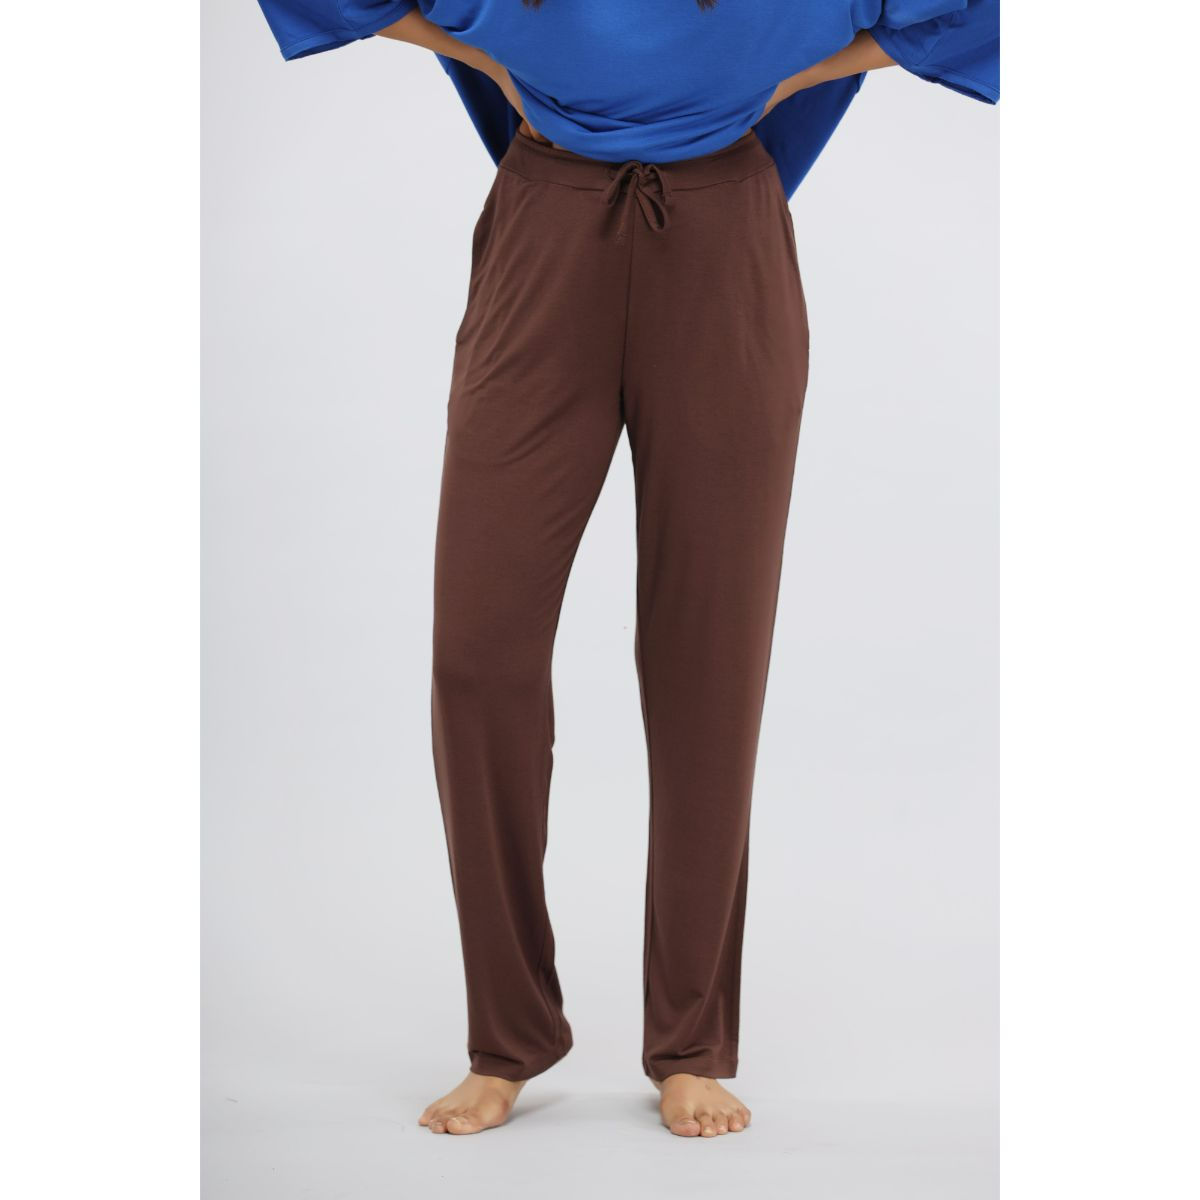 Light Brown Lounge Pants - Sweater Knit Pants - Wide-Leg Pants - Lulus